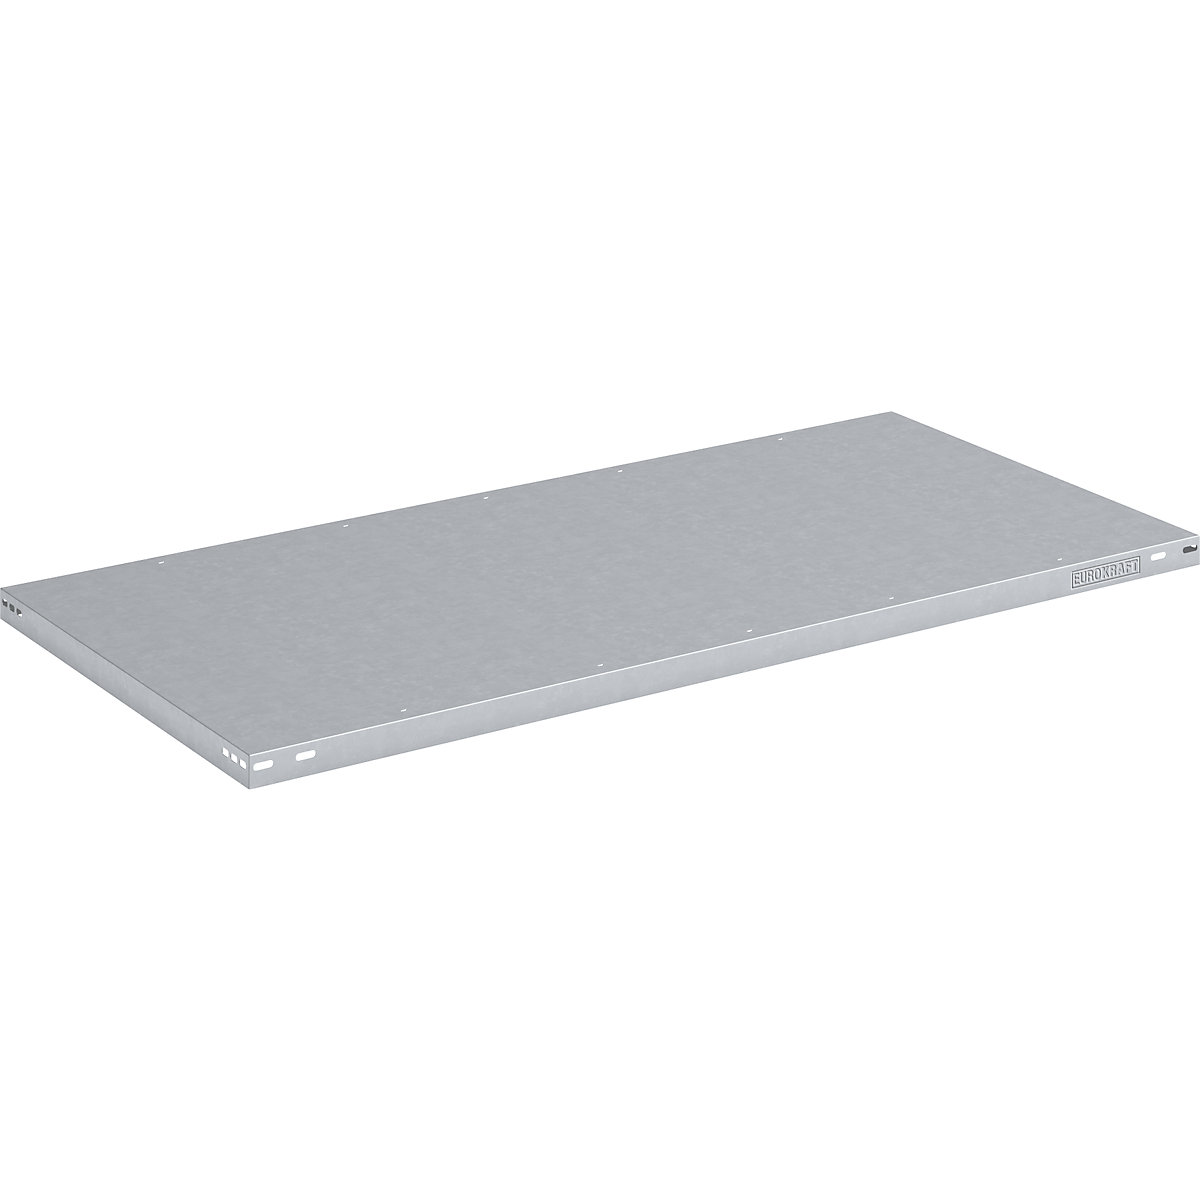 Zinc plated shelf – eurokraft pro, medium duty, WxD 1300 x 800 mm